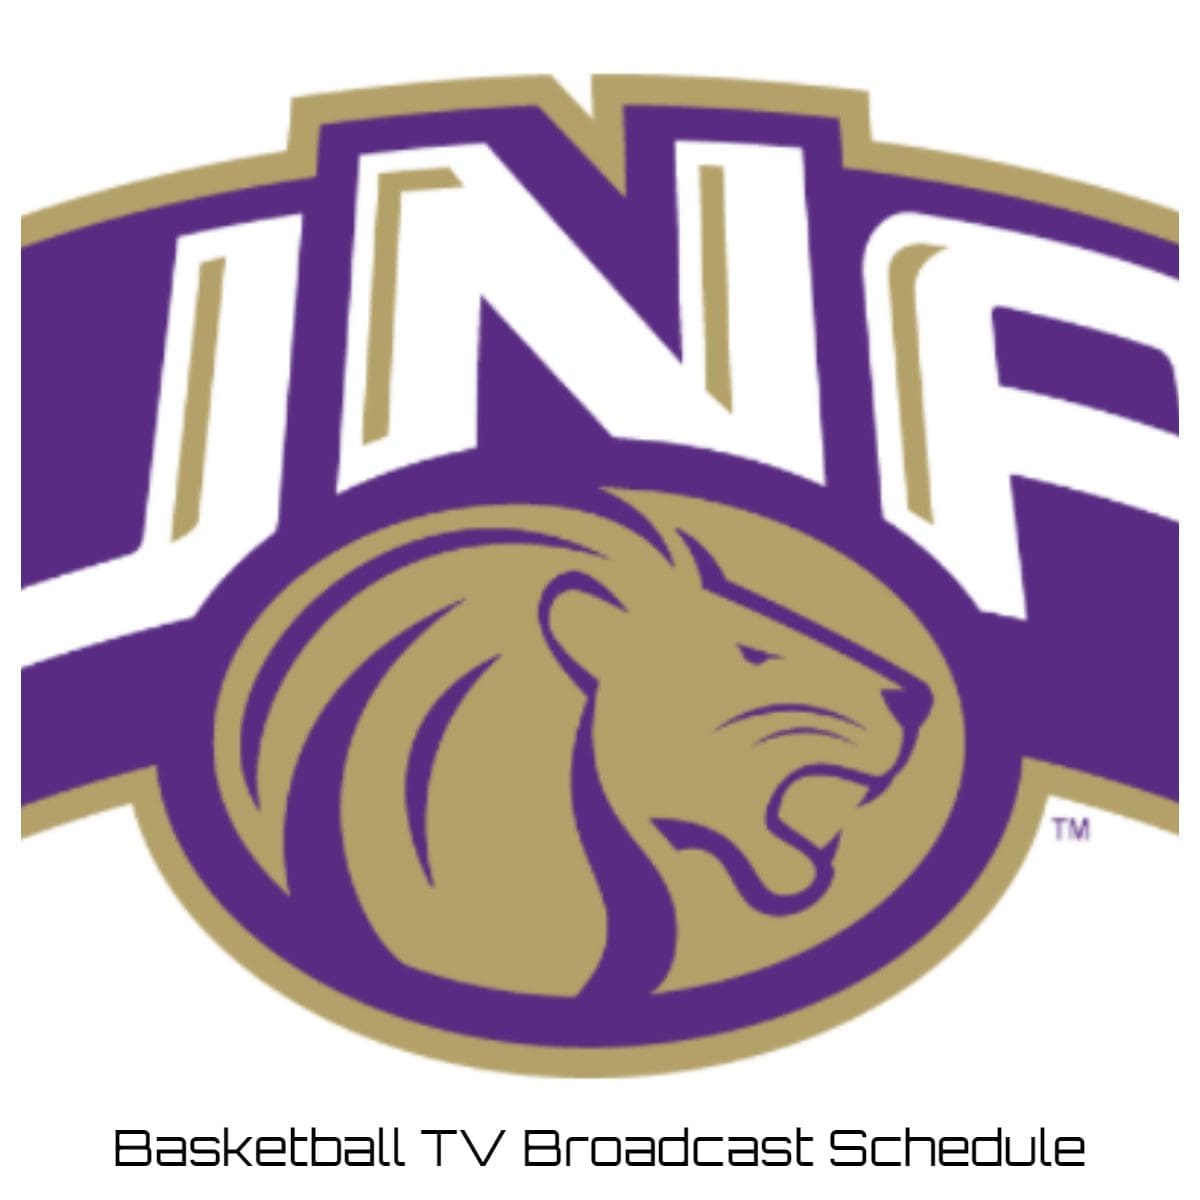 North Alabama Lions Basketball TV Broadcast Schedule